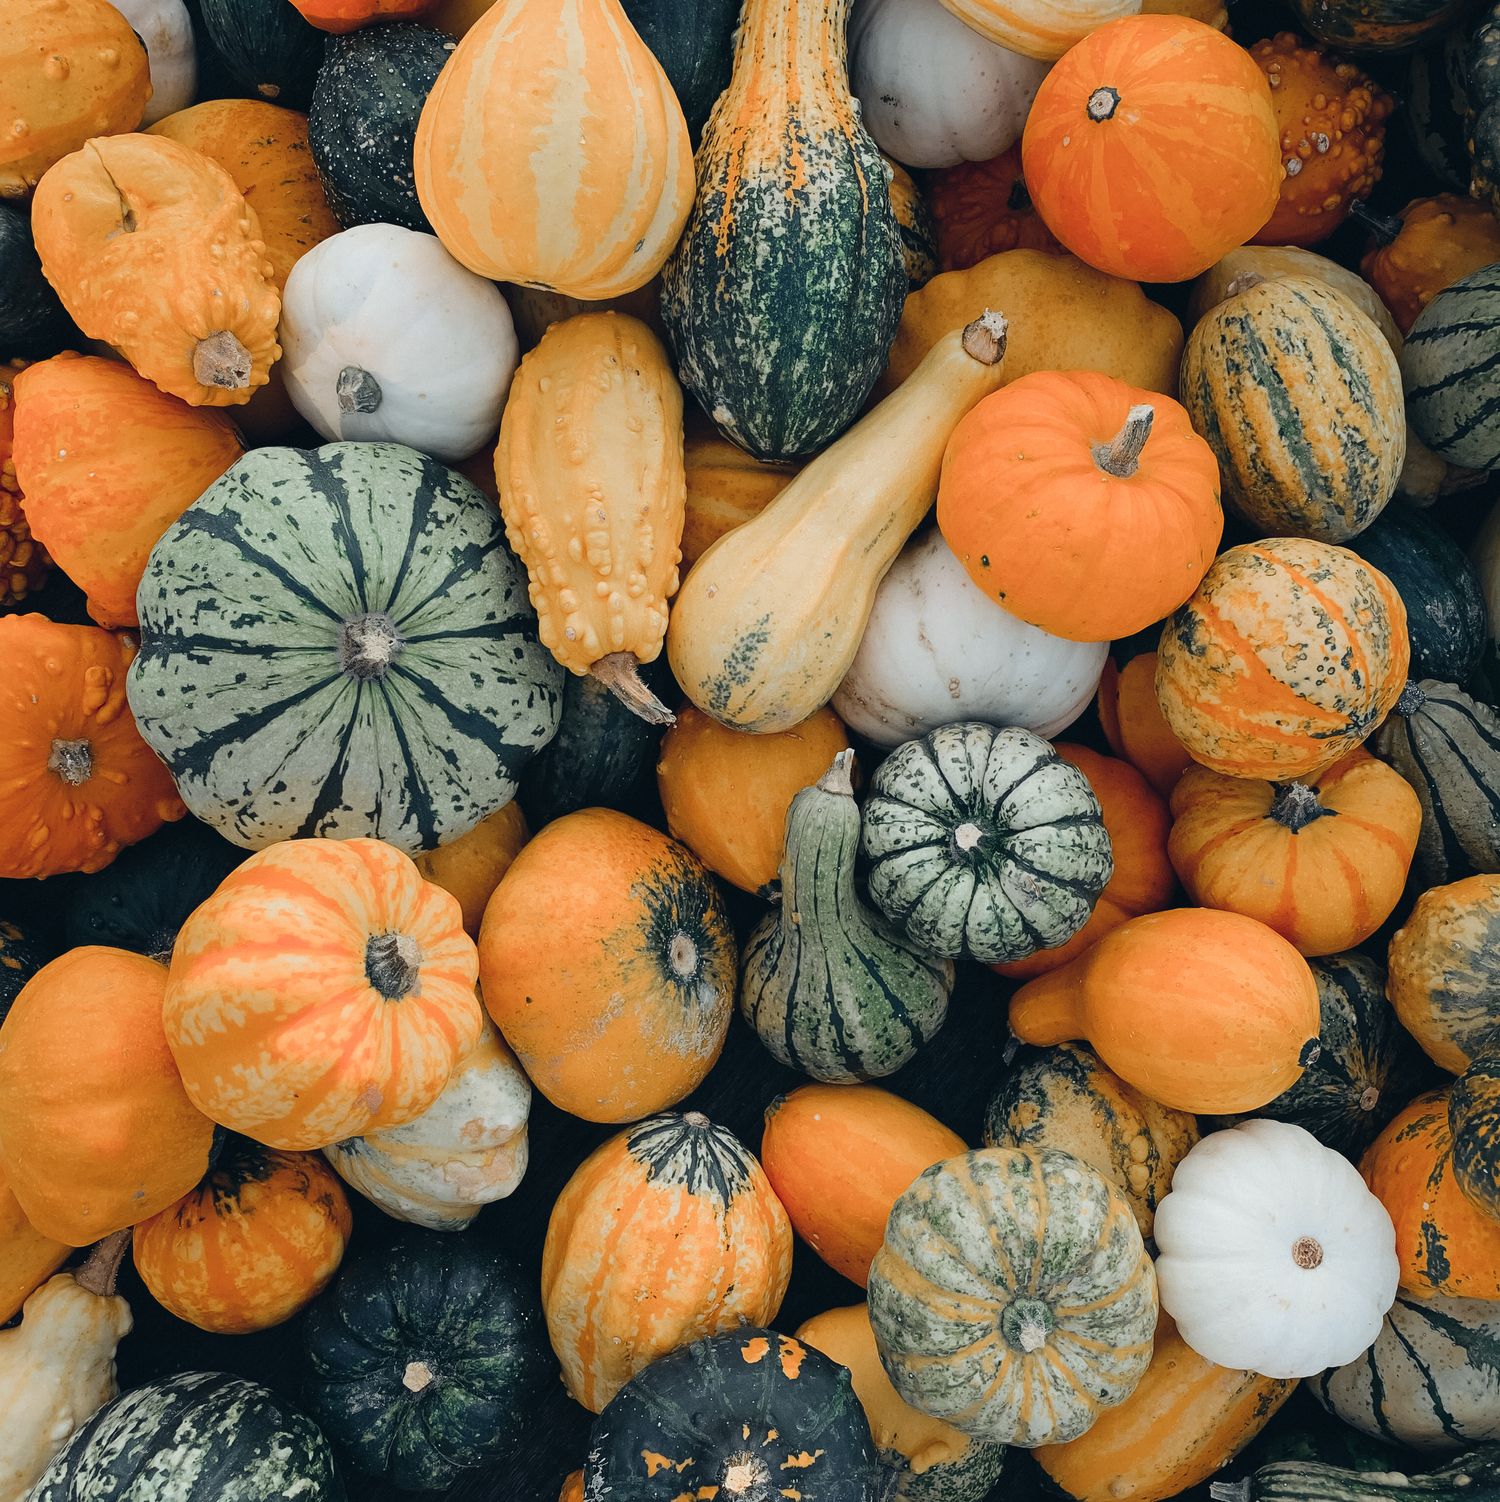 Conditions for using leftover pumpkins as fertilizer